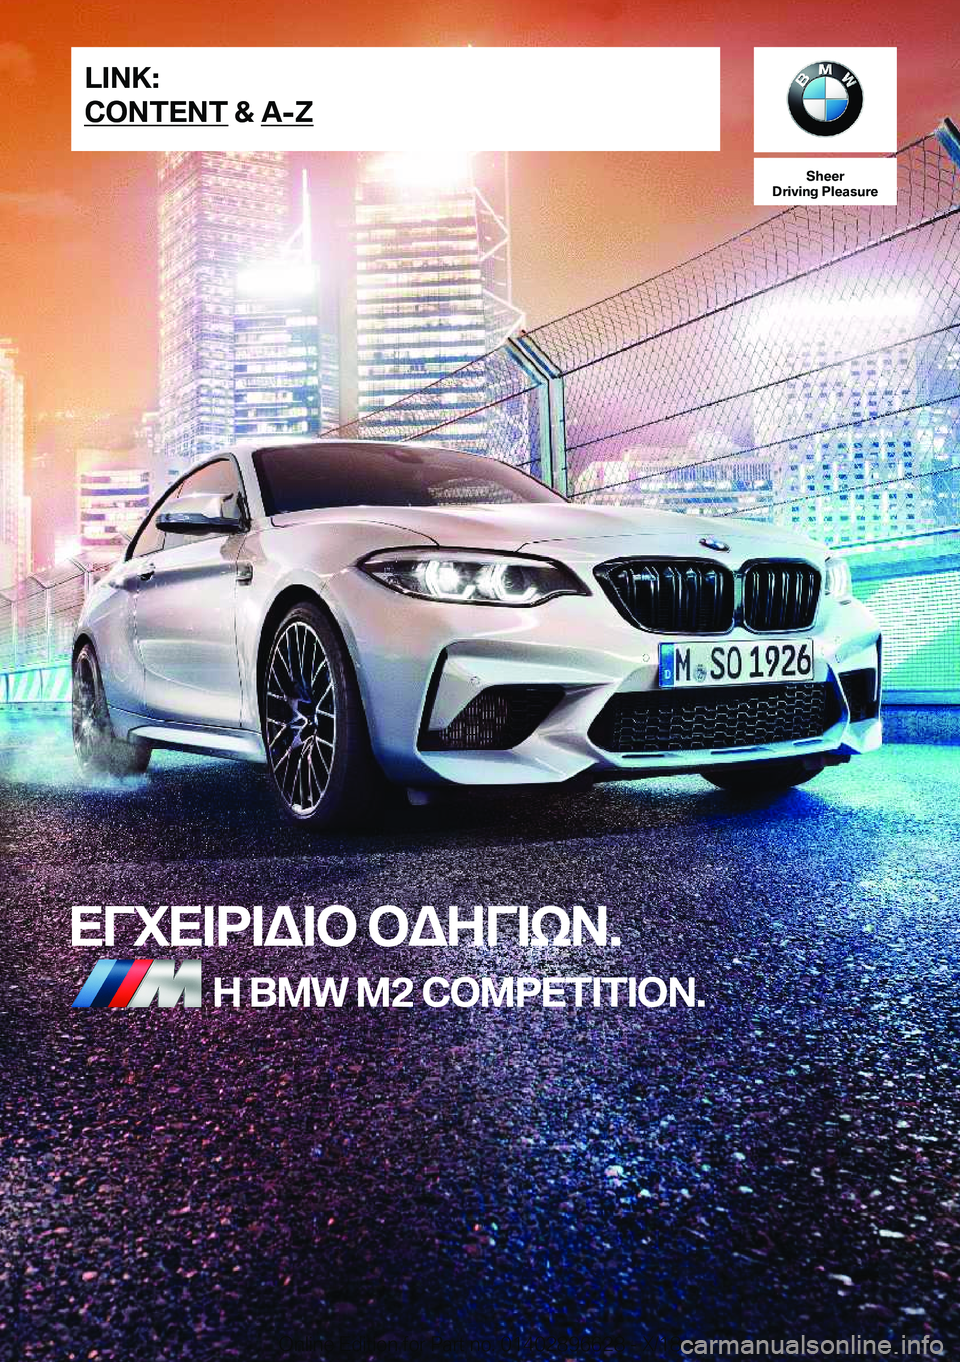 BMW M2 2019  ΟΔΗΓΌΣ ΧΡΉΣΗΣ (in Greek) �S�h�e�e�r
�D�r�i�v�i�n�g��P�l�e�a�s�u�r�e
XViX=d=W=b�bWZV=kA�.Z��B�M�W��M�2��C�O�M�P�E�T�I�T�I�O�N�.�L�I�N�K�:
�C�O�N�T�E�N�T��&��A�-�Z�O�n�l�i�n�e��E�d�i�t�i�o�n��f�o�r��